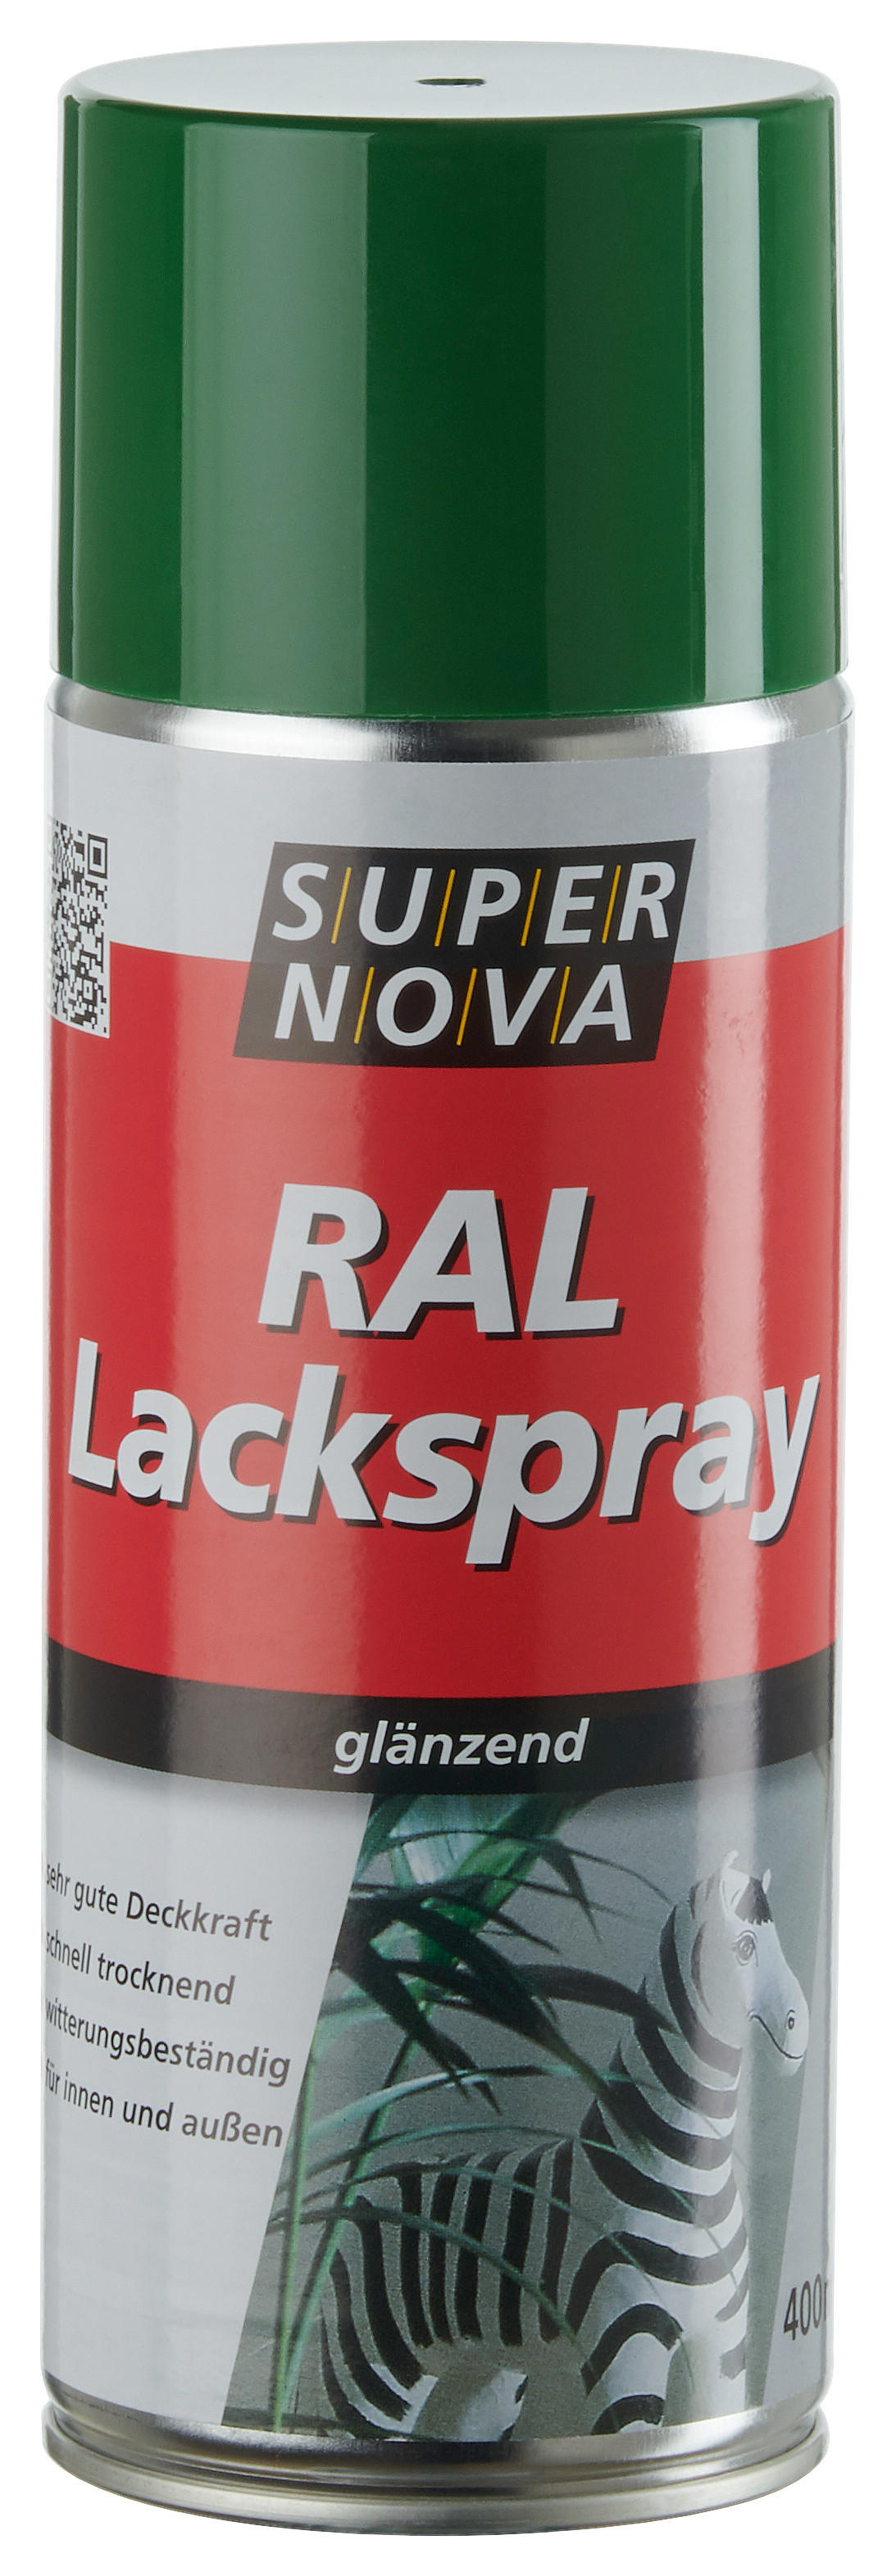 Super-Nova Lackspray laubgrün glänzend ca. 0,4 l Lackspray 400ml - laubgrün (400ml)